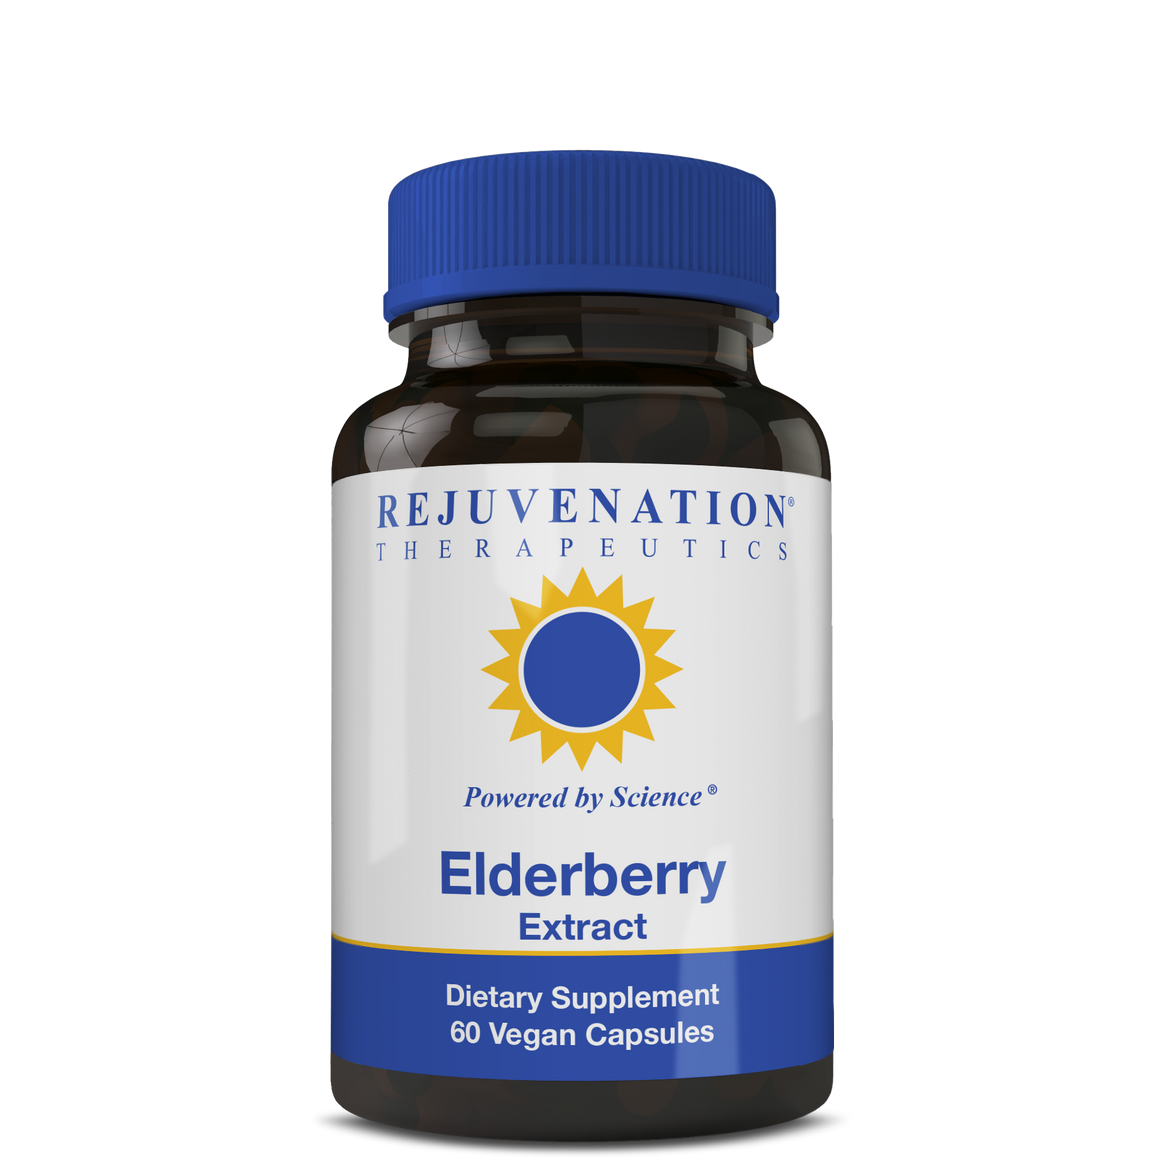 Elderberry Extract (250 mg, 60 Vegan Capsules) - Supports Healthy Immune Response, Non-GMO, Gluten-Free